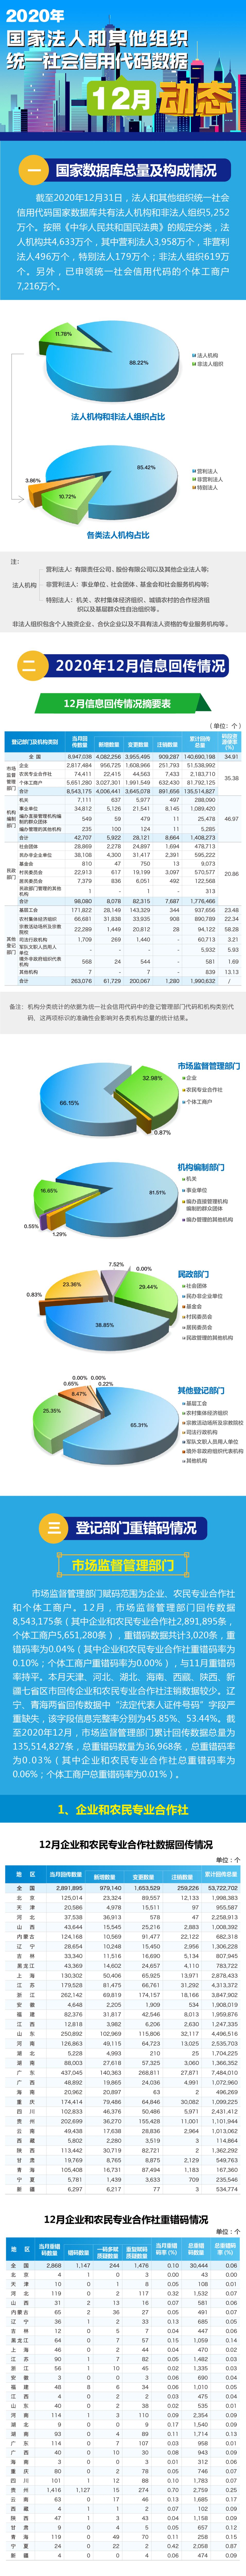 kaiyun官方网站下载-
2020年国家法人和其他组织统一社会信用代码数据12月动态(图1)